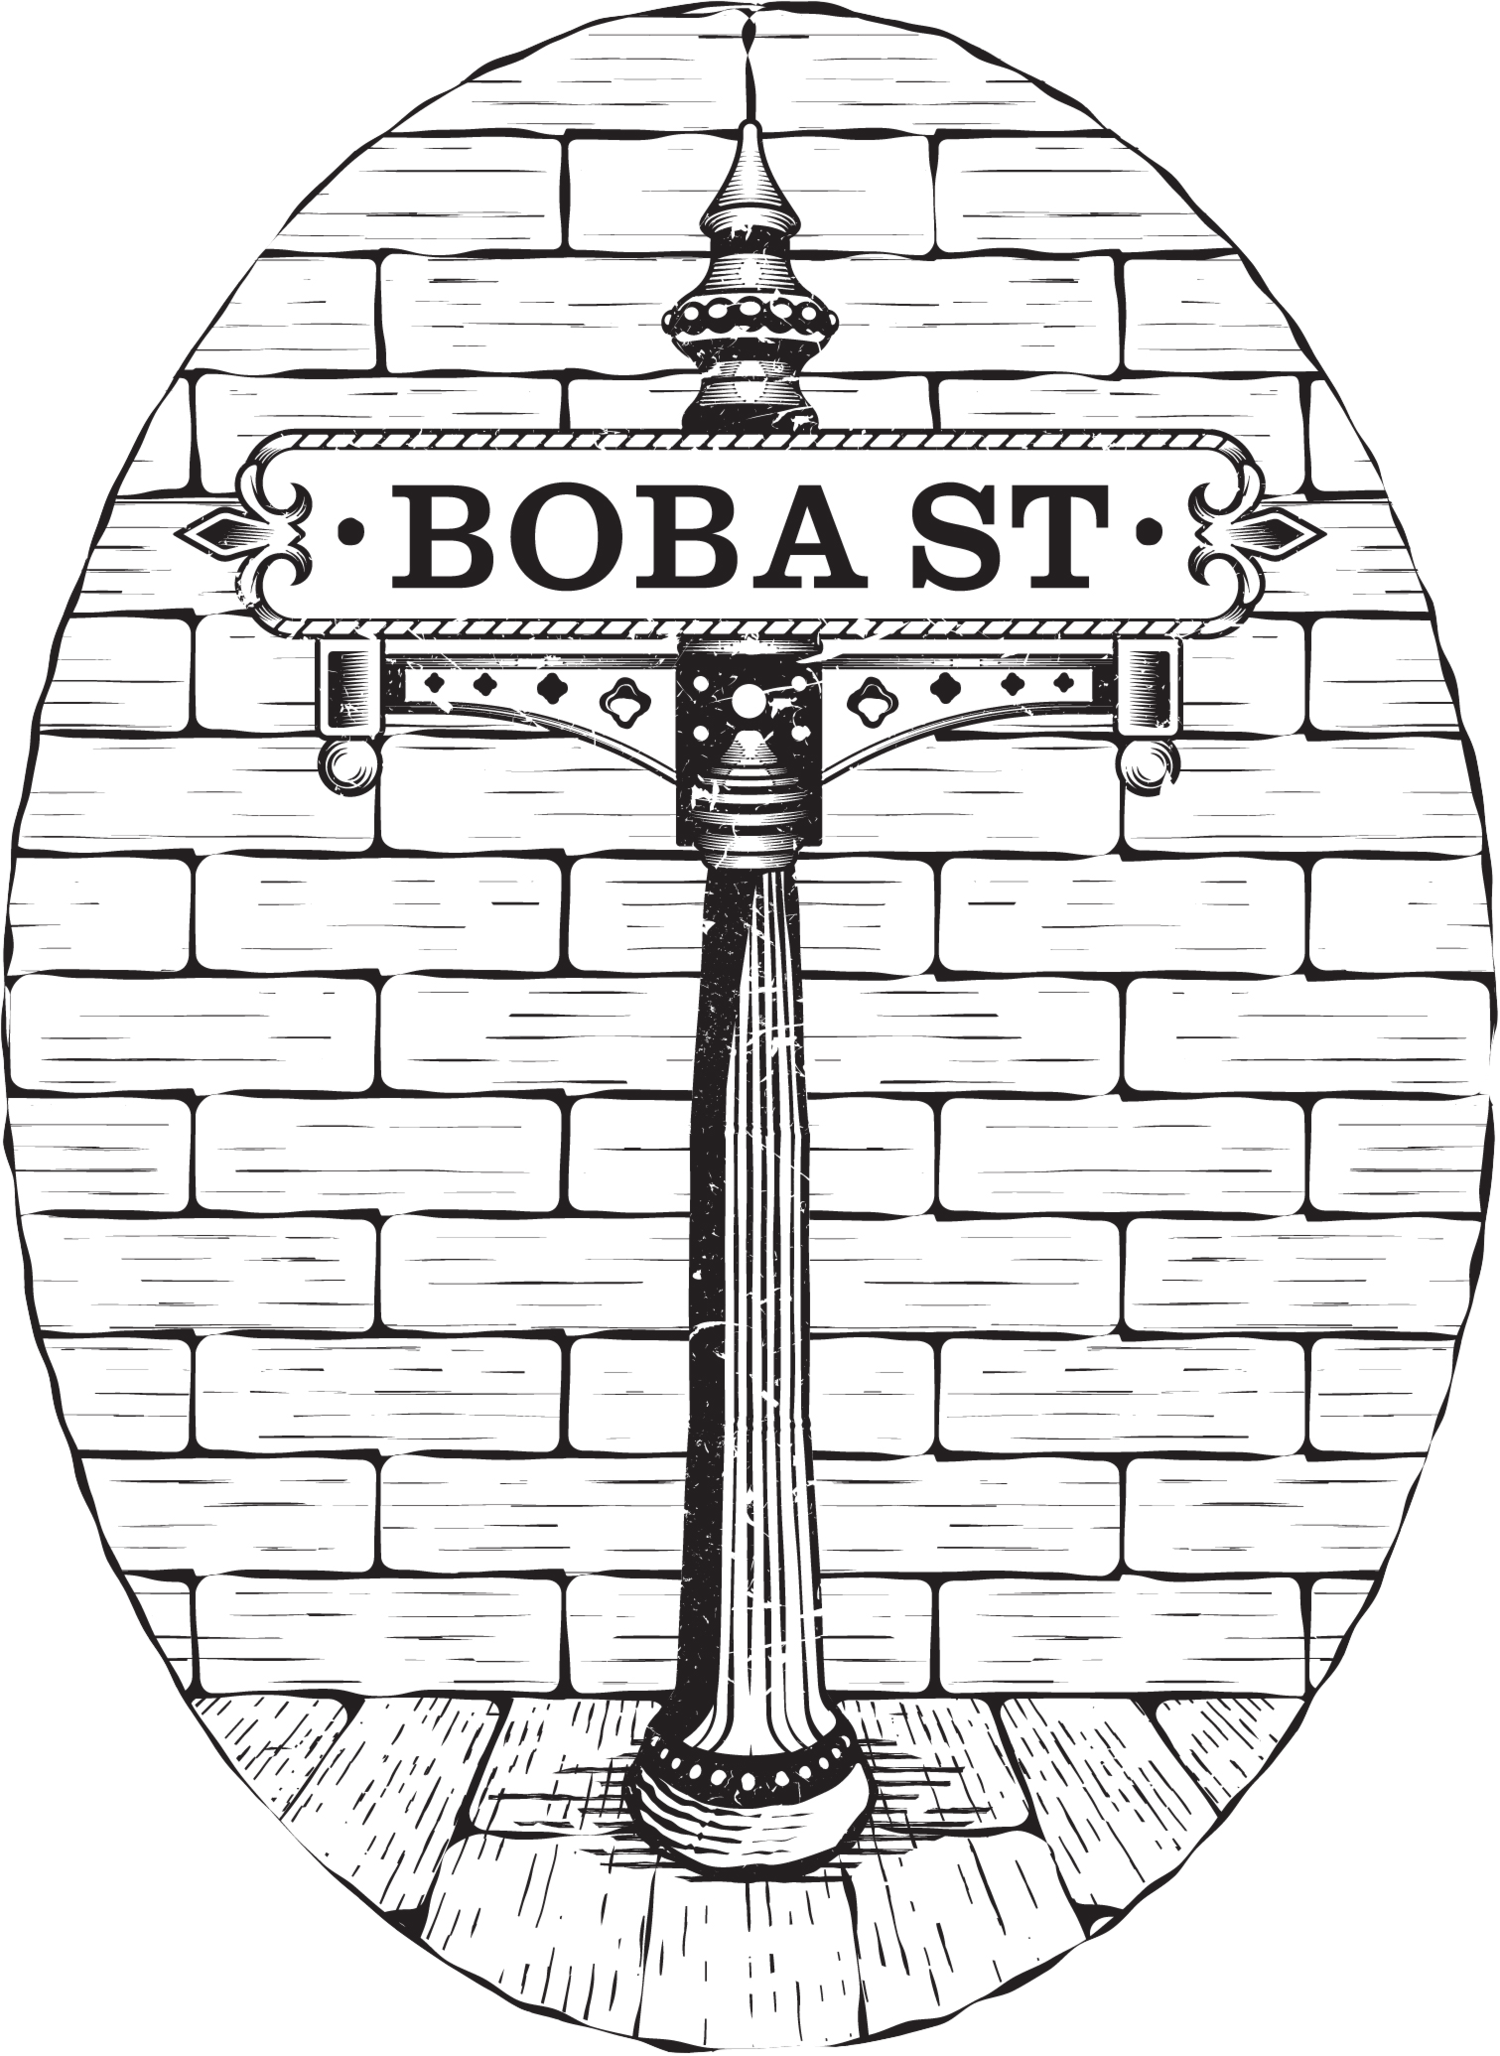 Boba St. 